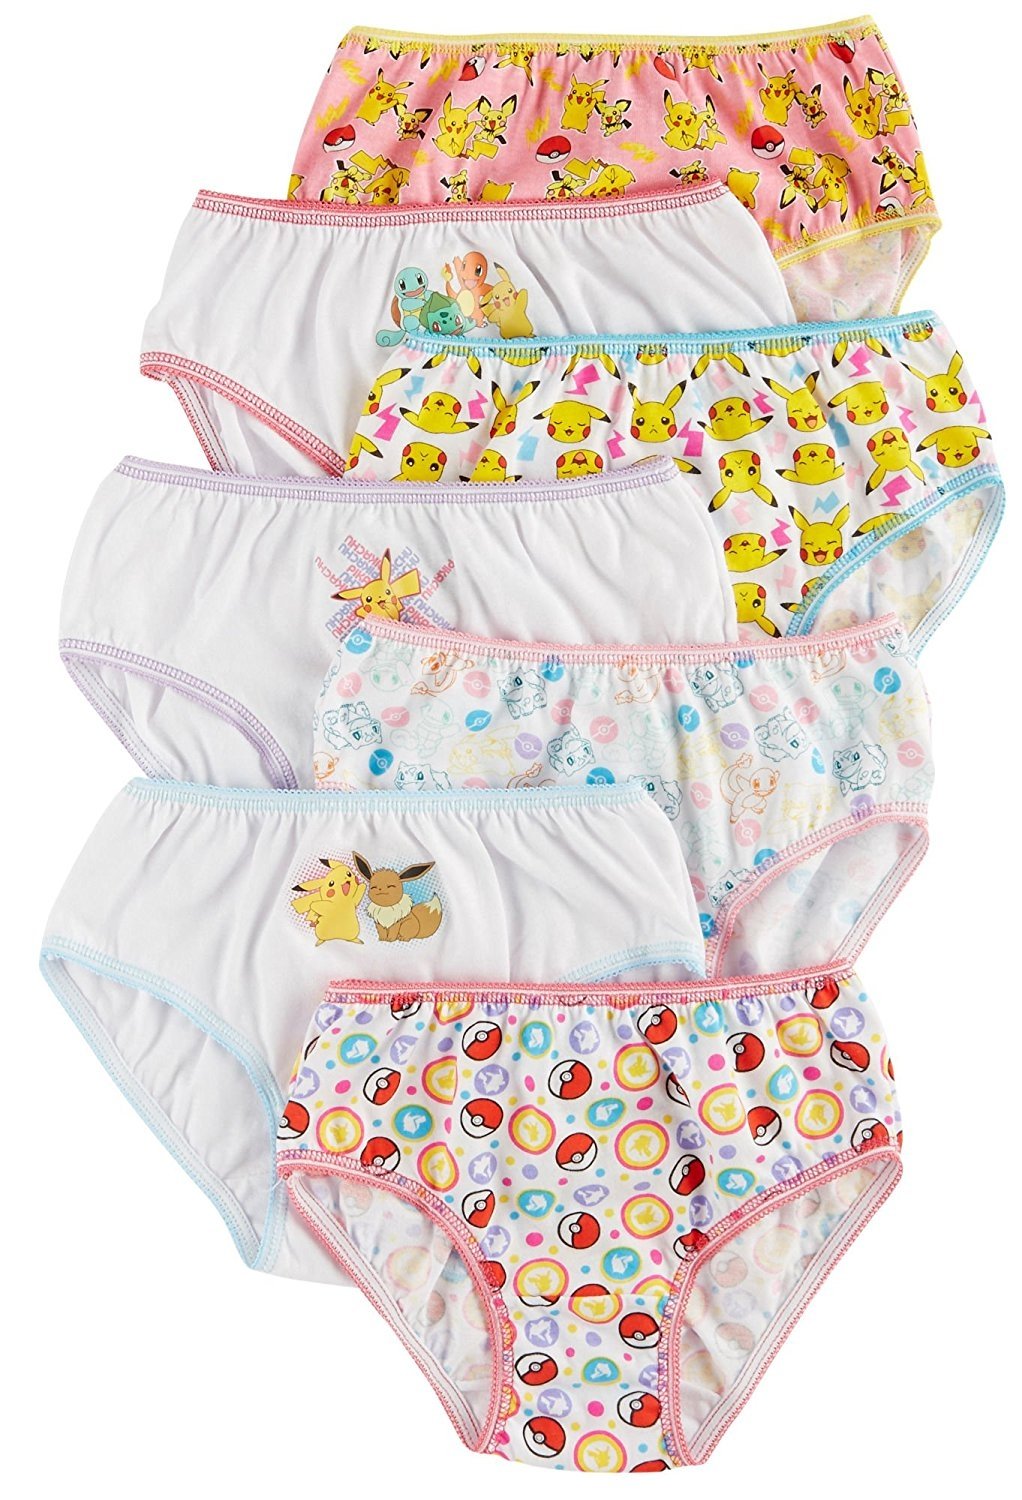 Pokemon Girls Panties Underwear 7 pack Sizes 4, 6, 8